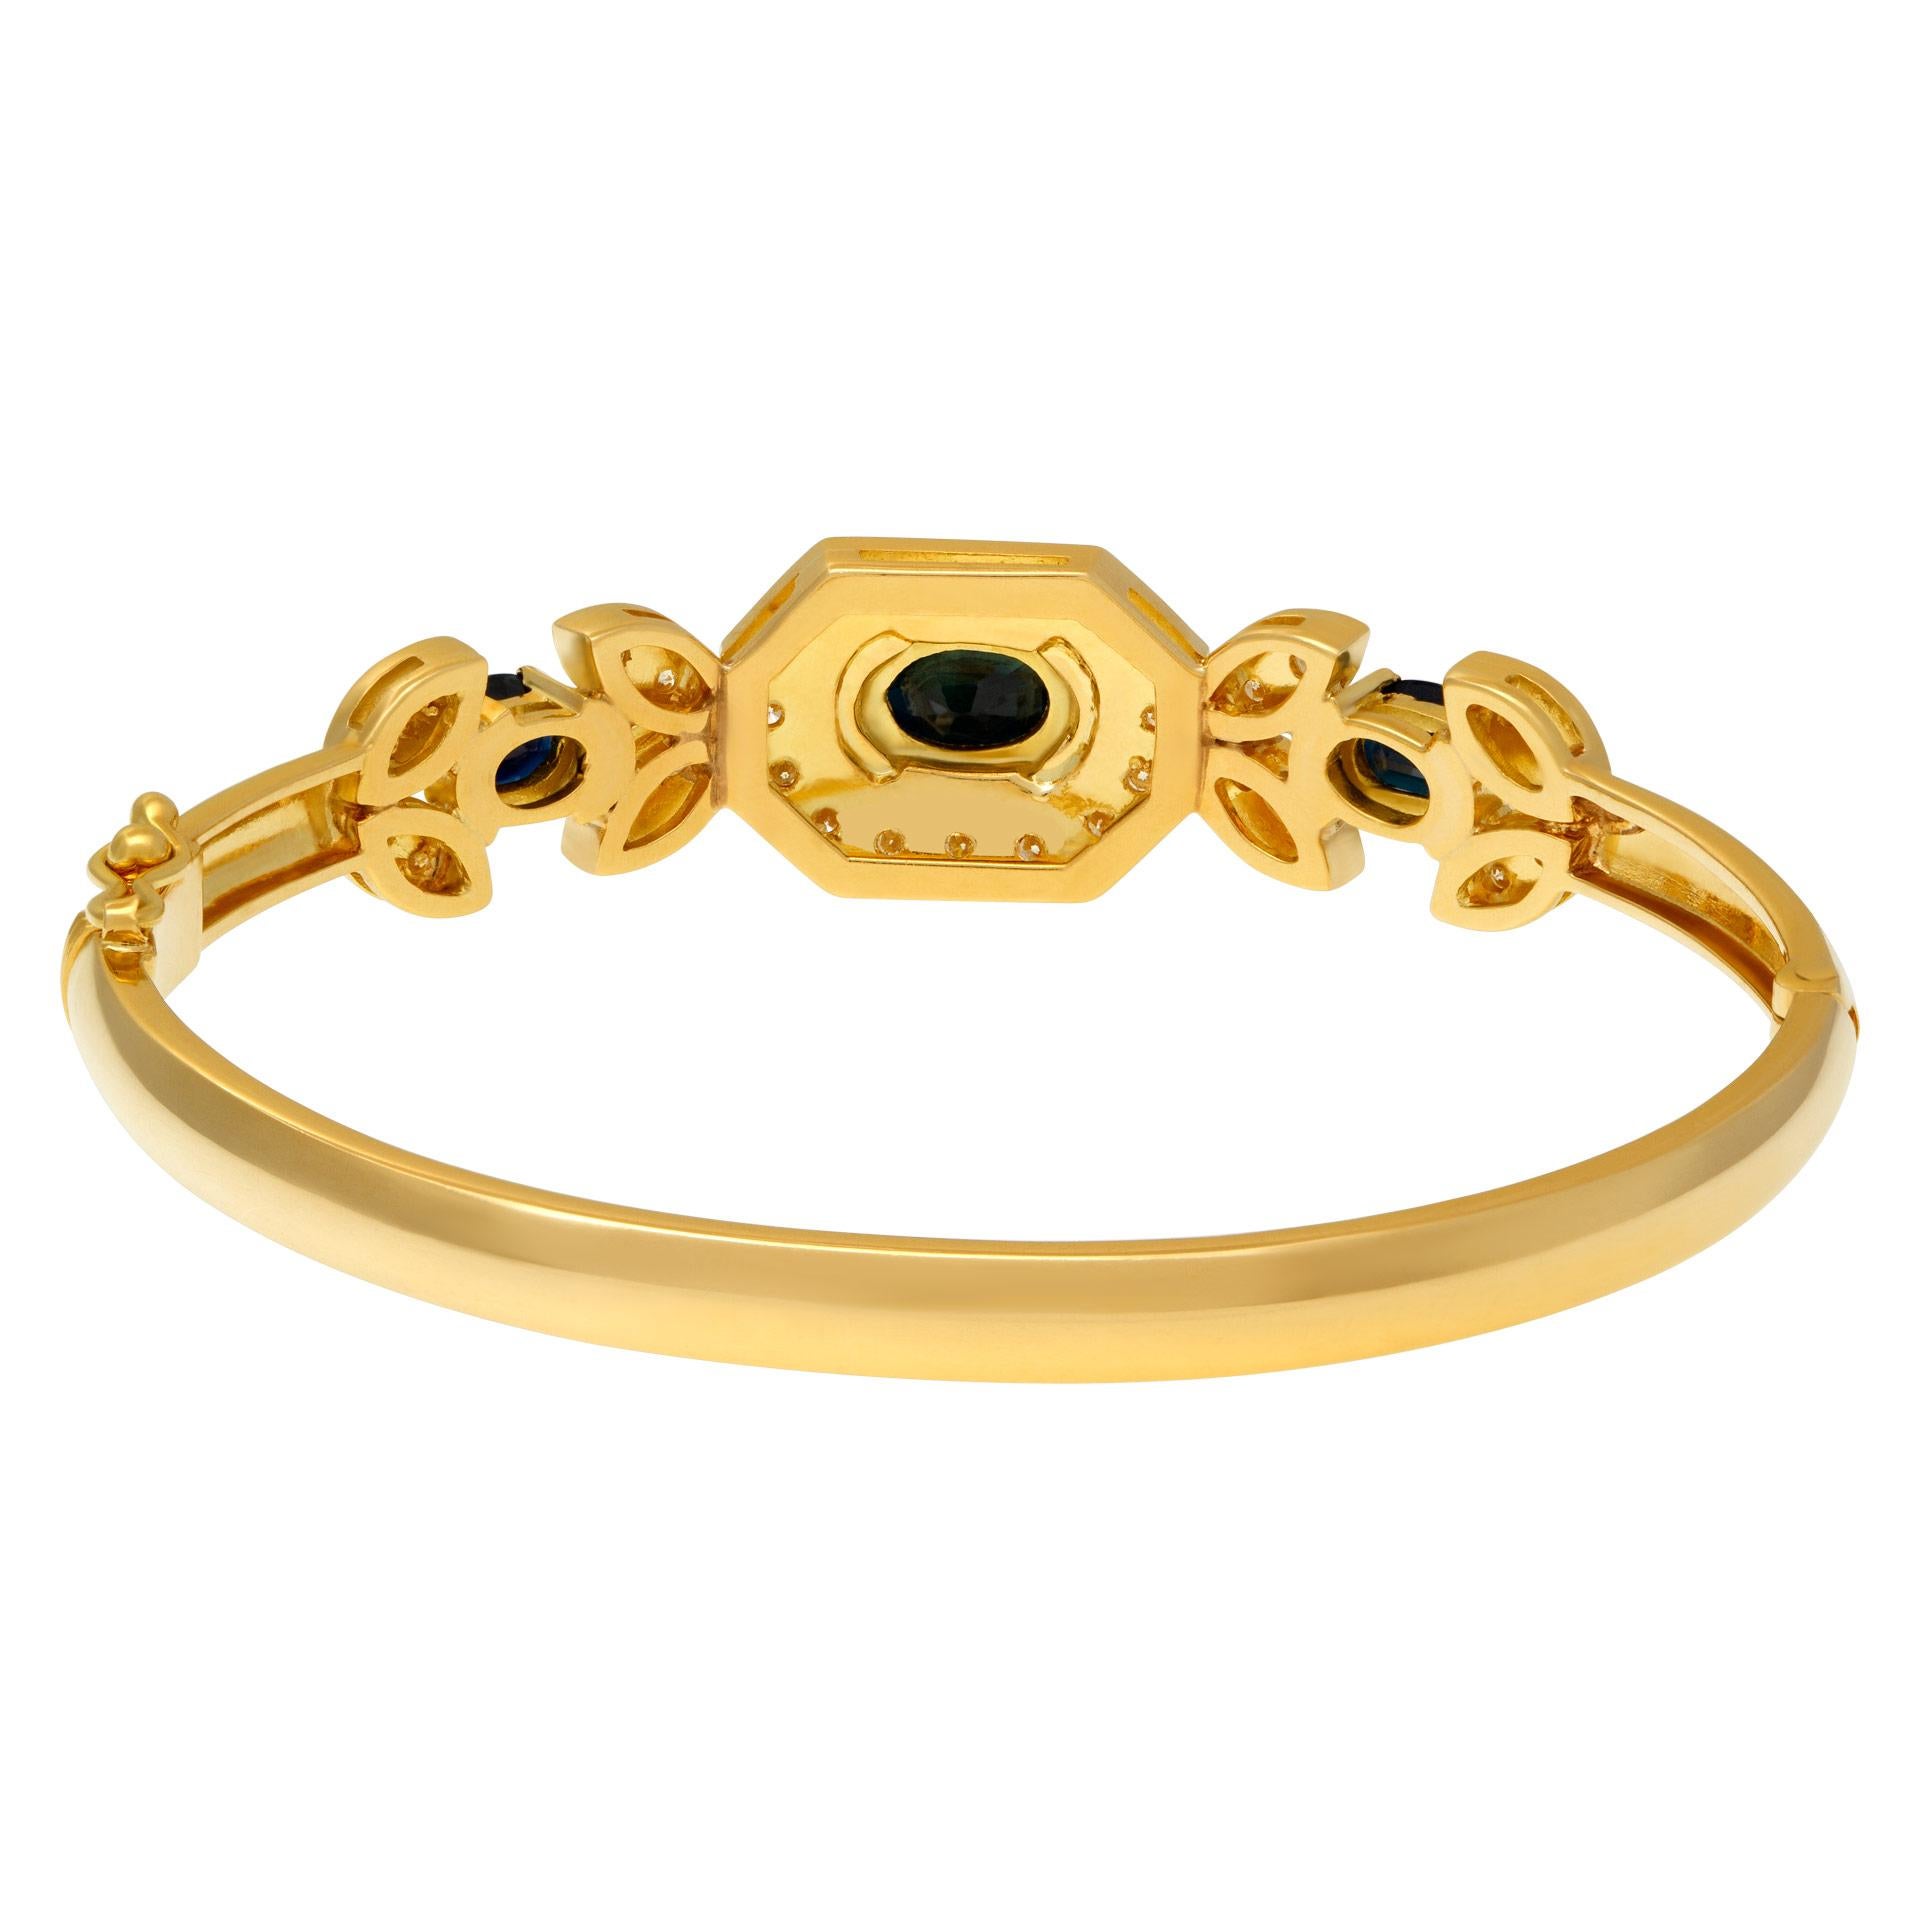 Women's Diamond and Sapphire Bangle Bracelet Set in 18k Yellow Gold